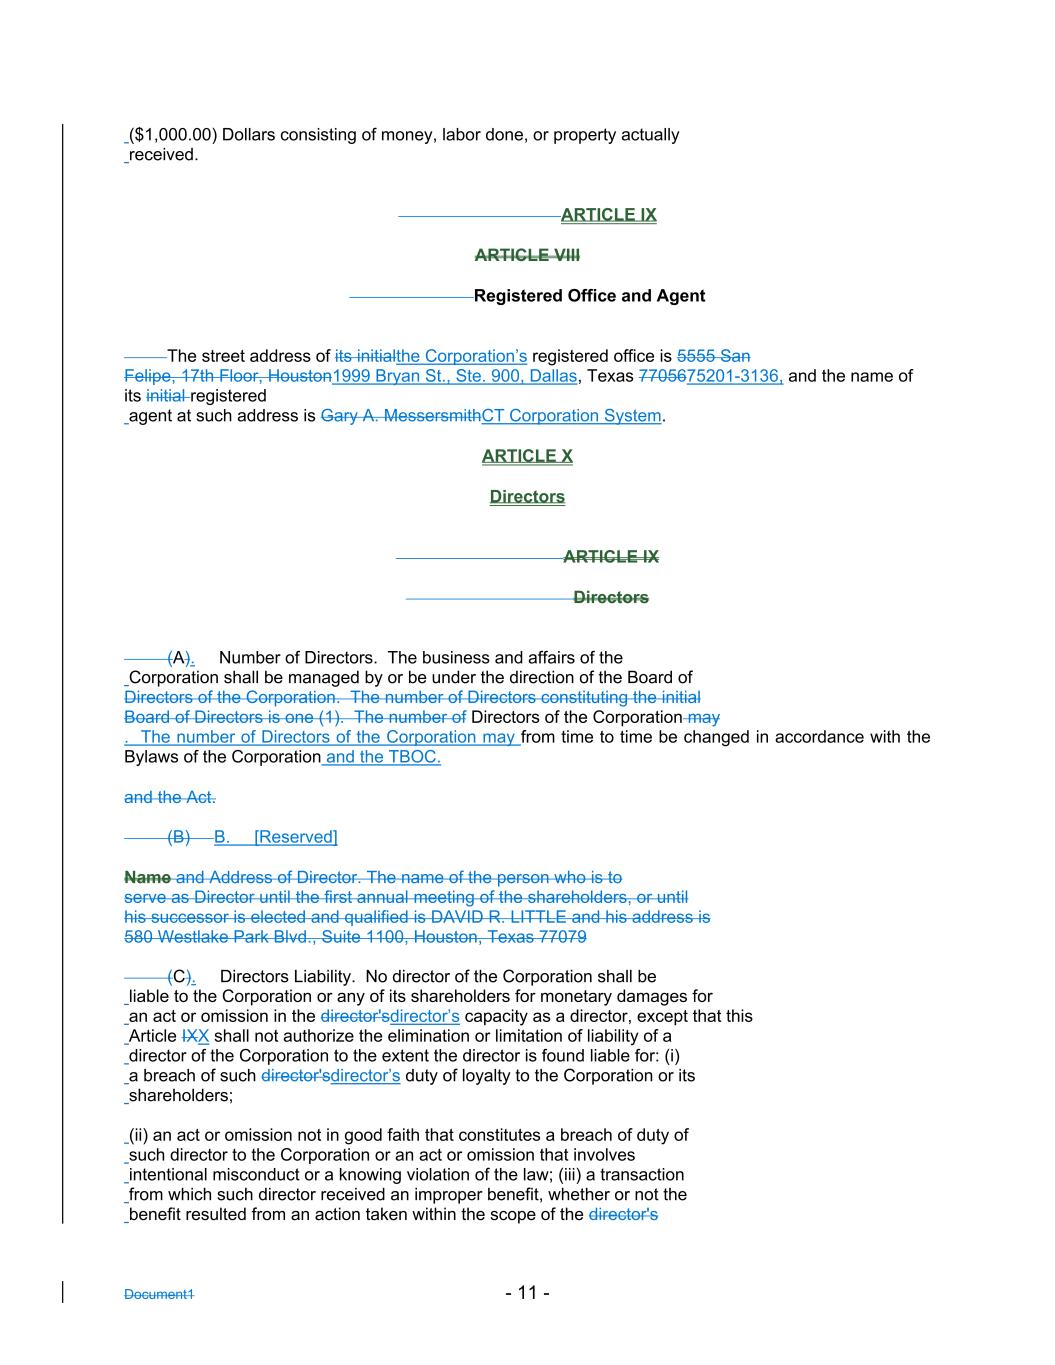 Microsoft Word - Cumulative Redline DXP Certificate of Formation.docx011.jpg